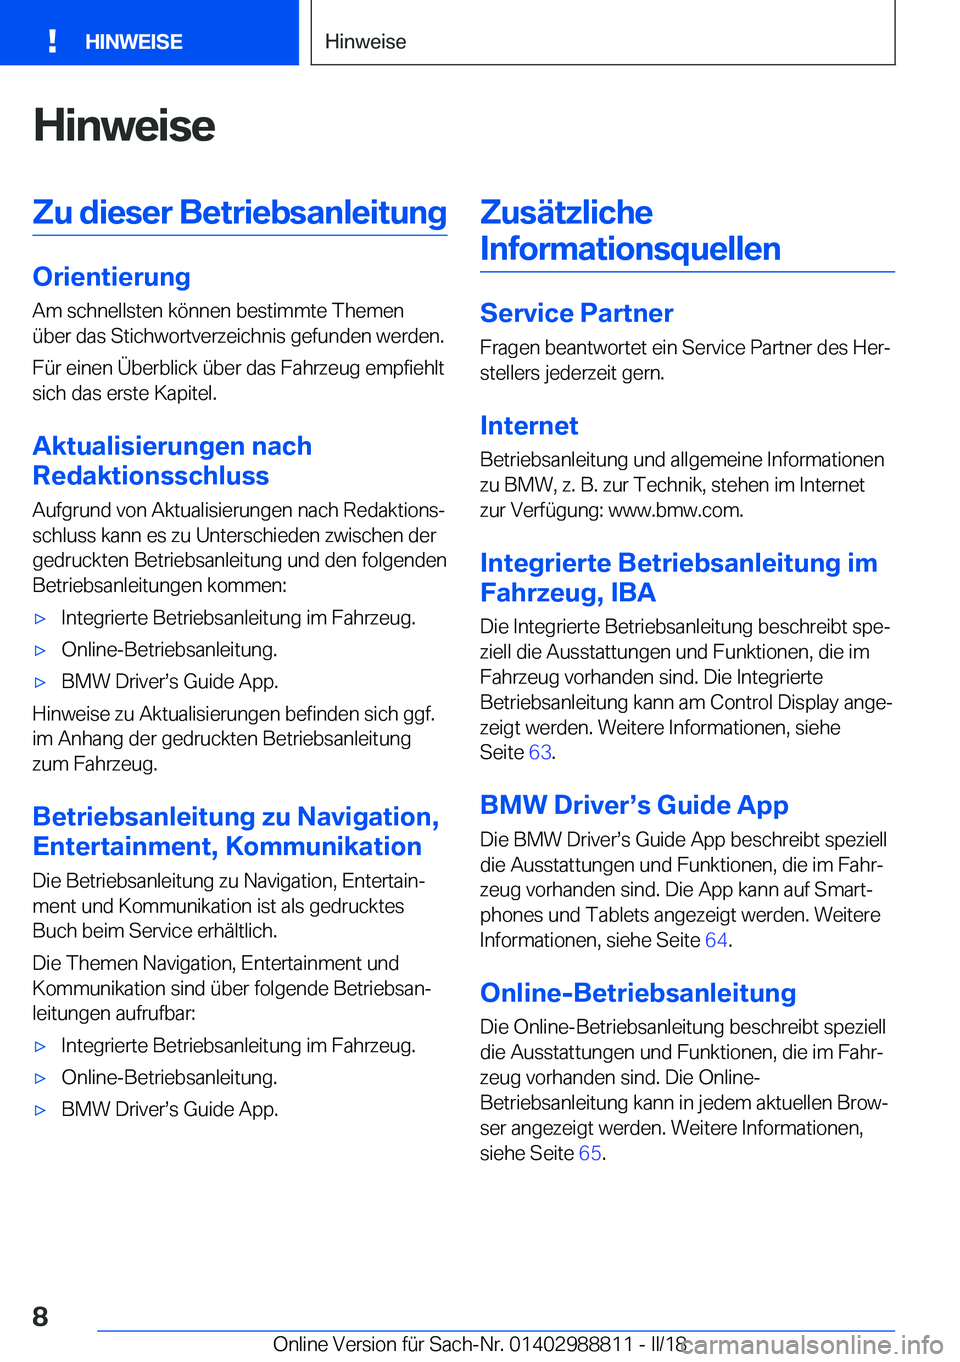 BMW X5 2018  Betriebsanleitungen (in German) �H�i�n�w�e�i�s�e�Z�u��d�i�e�s�e�r��B�e�t�r�i�e�b�s�a�n�l�e�i�t�u�n�g
�O�r�i�e�n�t�i�e�r�u�n�g�A�m� �s�c�h�n�e�l�l�s�t�e�n� �k�